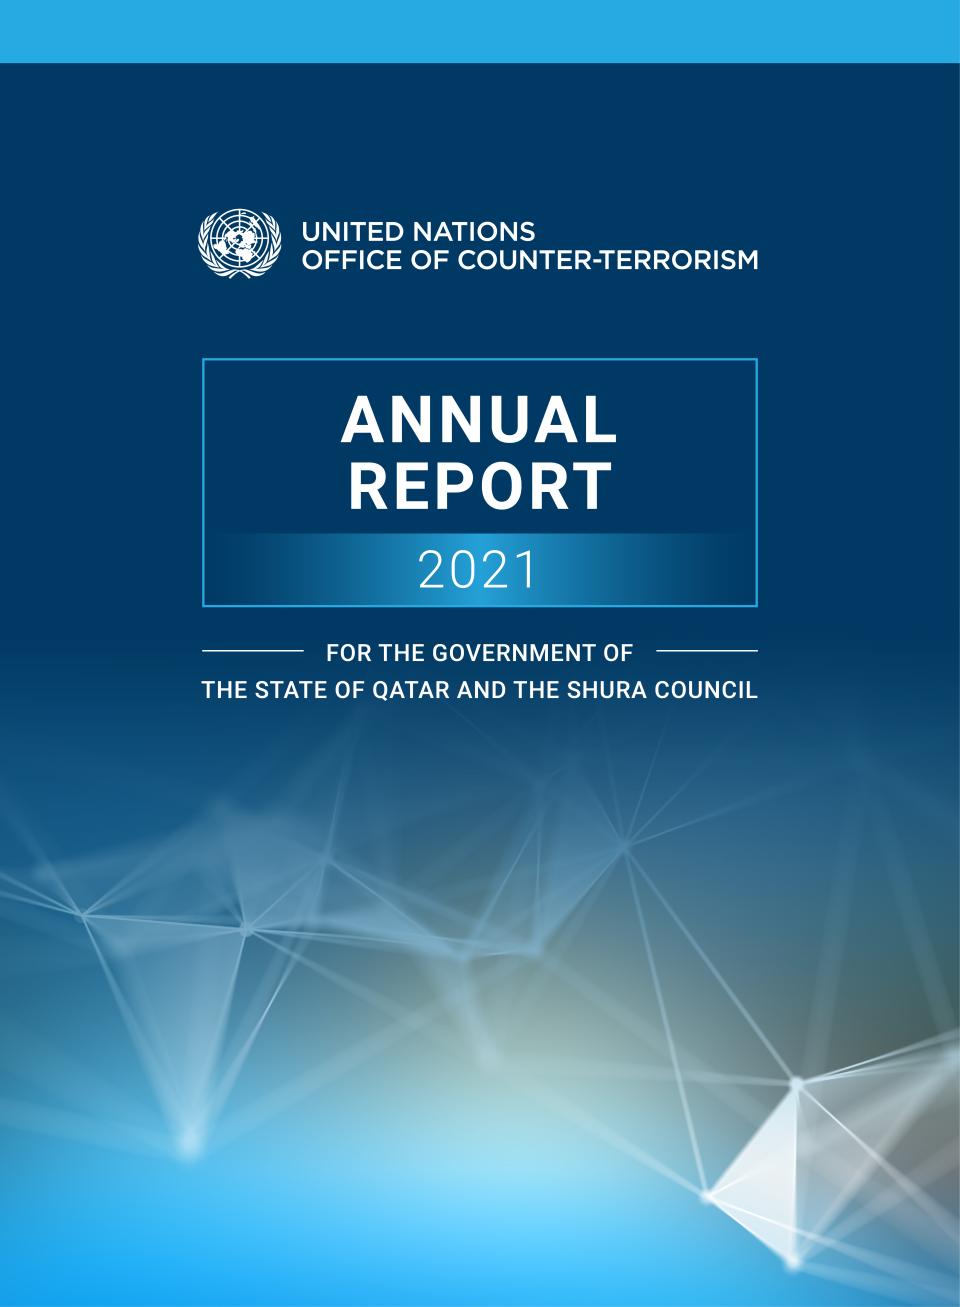 Annual report cover artwork